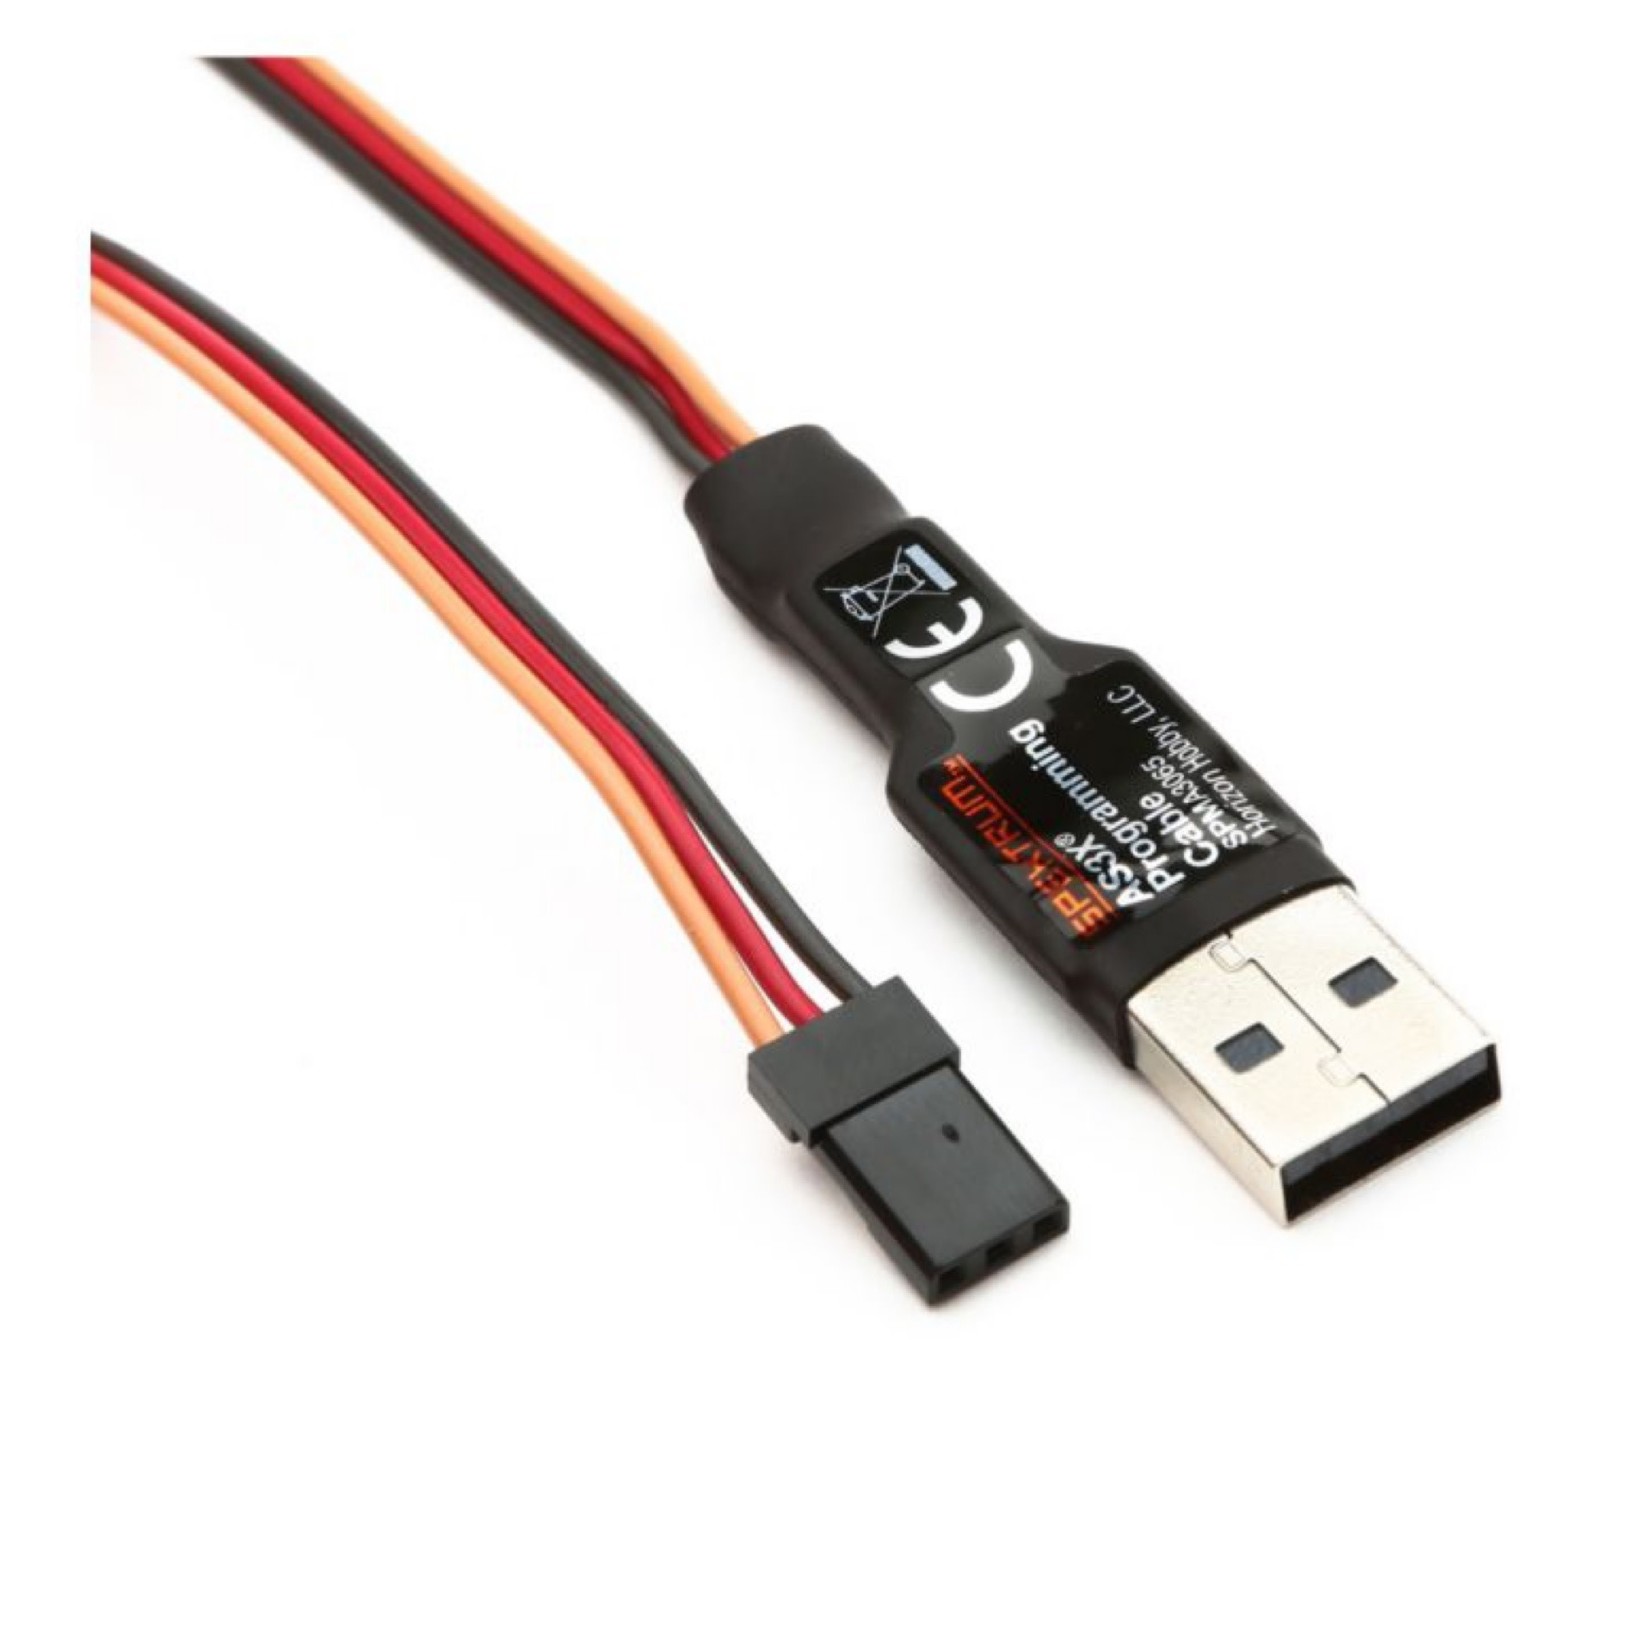 Spektrum Spektrum Transmitter/Receiver Programming Cable: USB Interface #SPMA3065